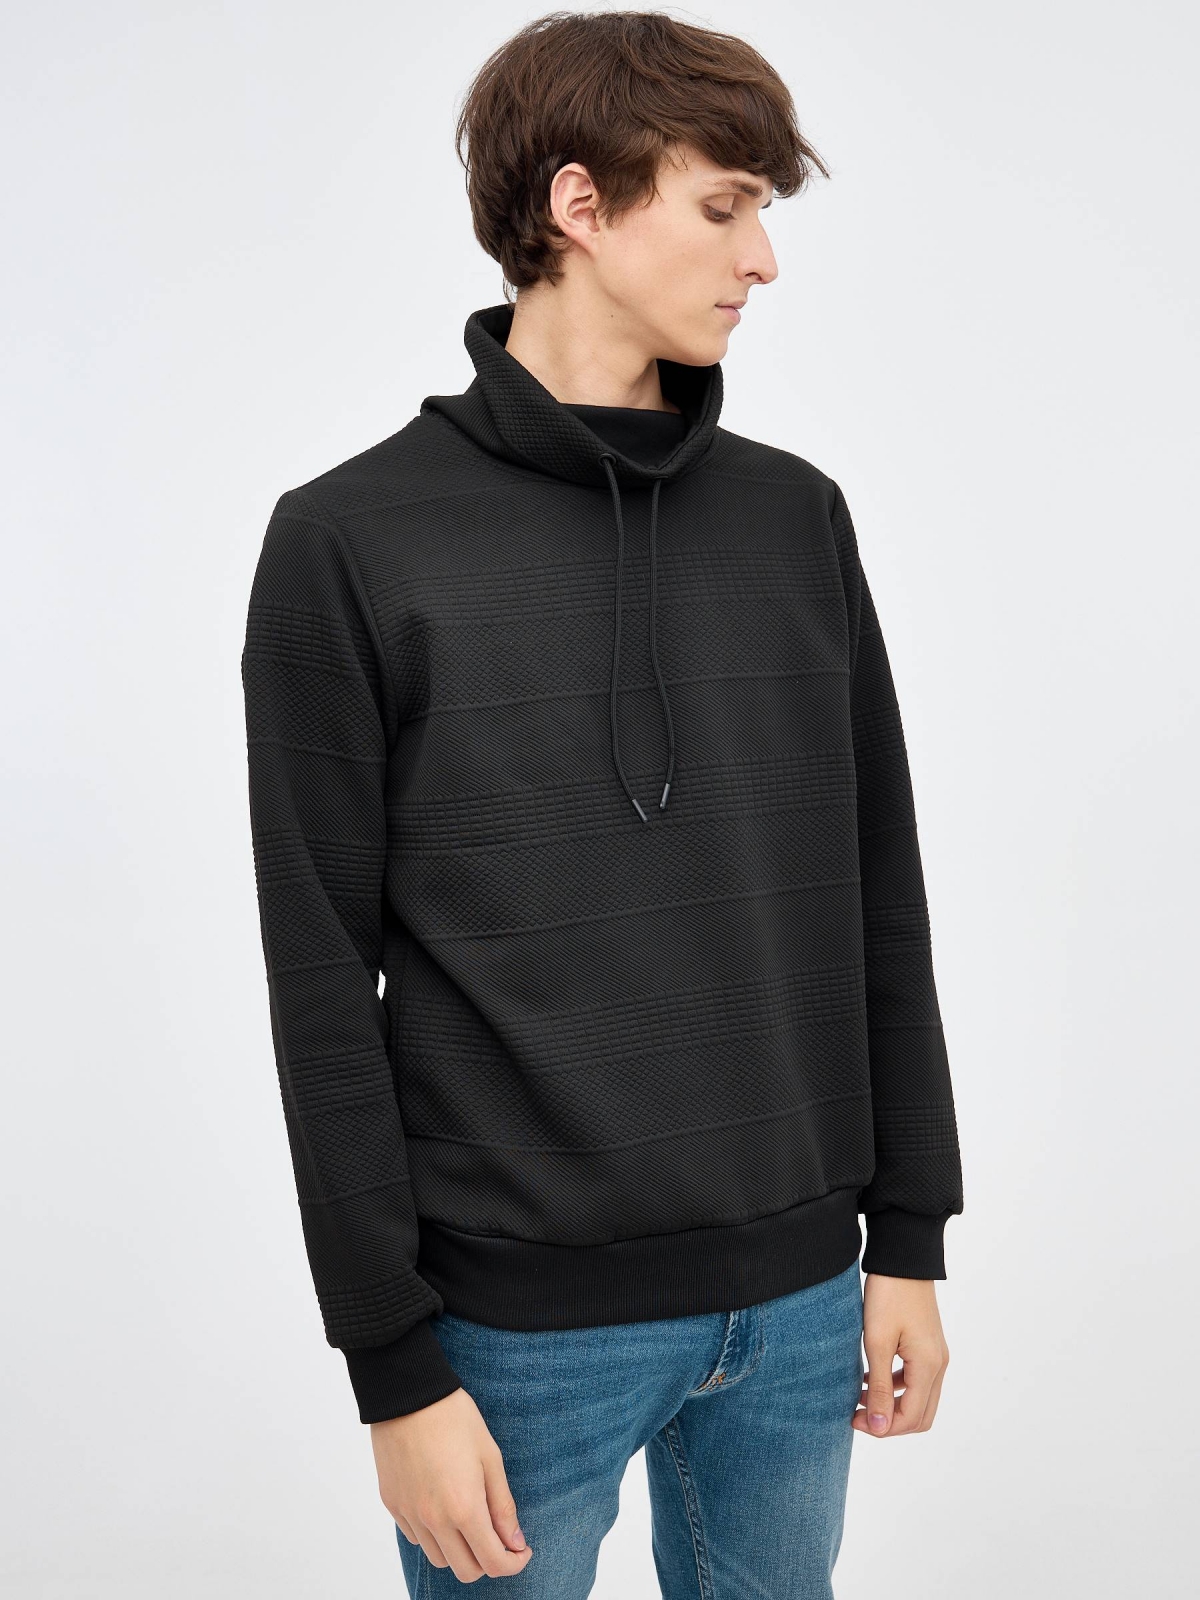 Textured crewneck sweatshirt black middle front view